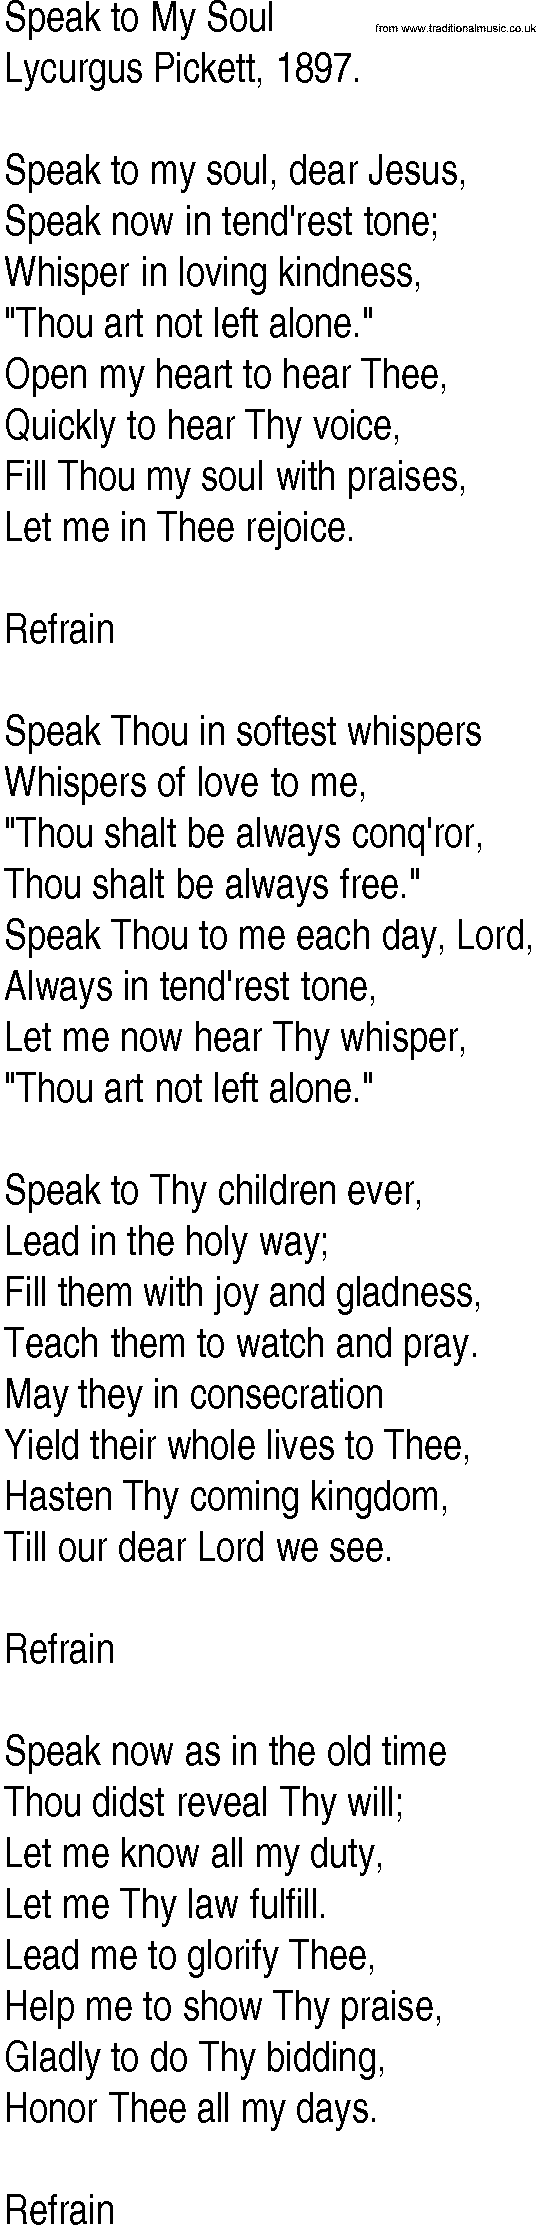 Hymn and Gospel Song: Speak to My Soul by Lycurgus Pickett lyrics